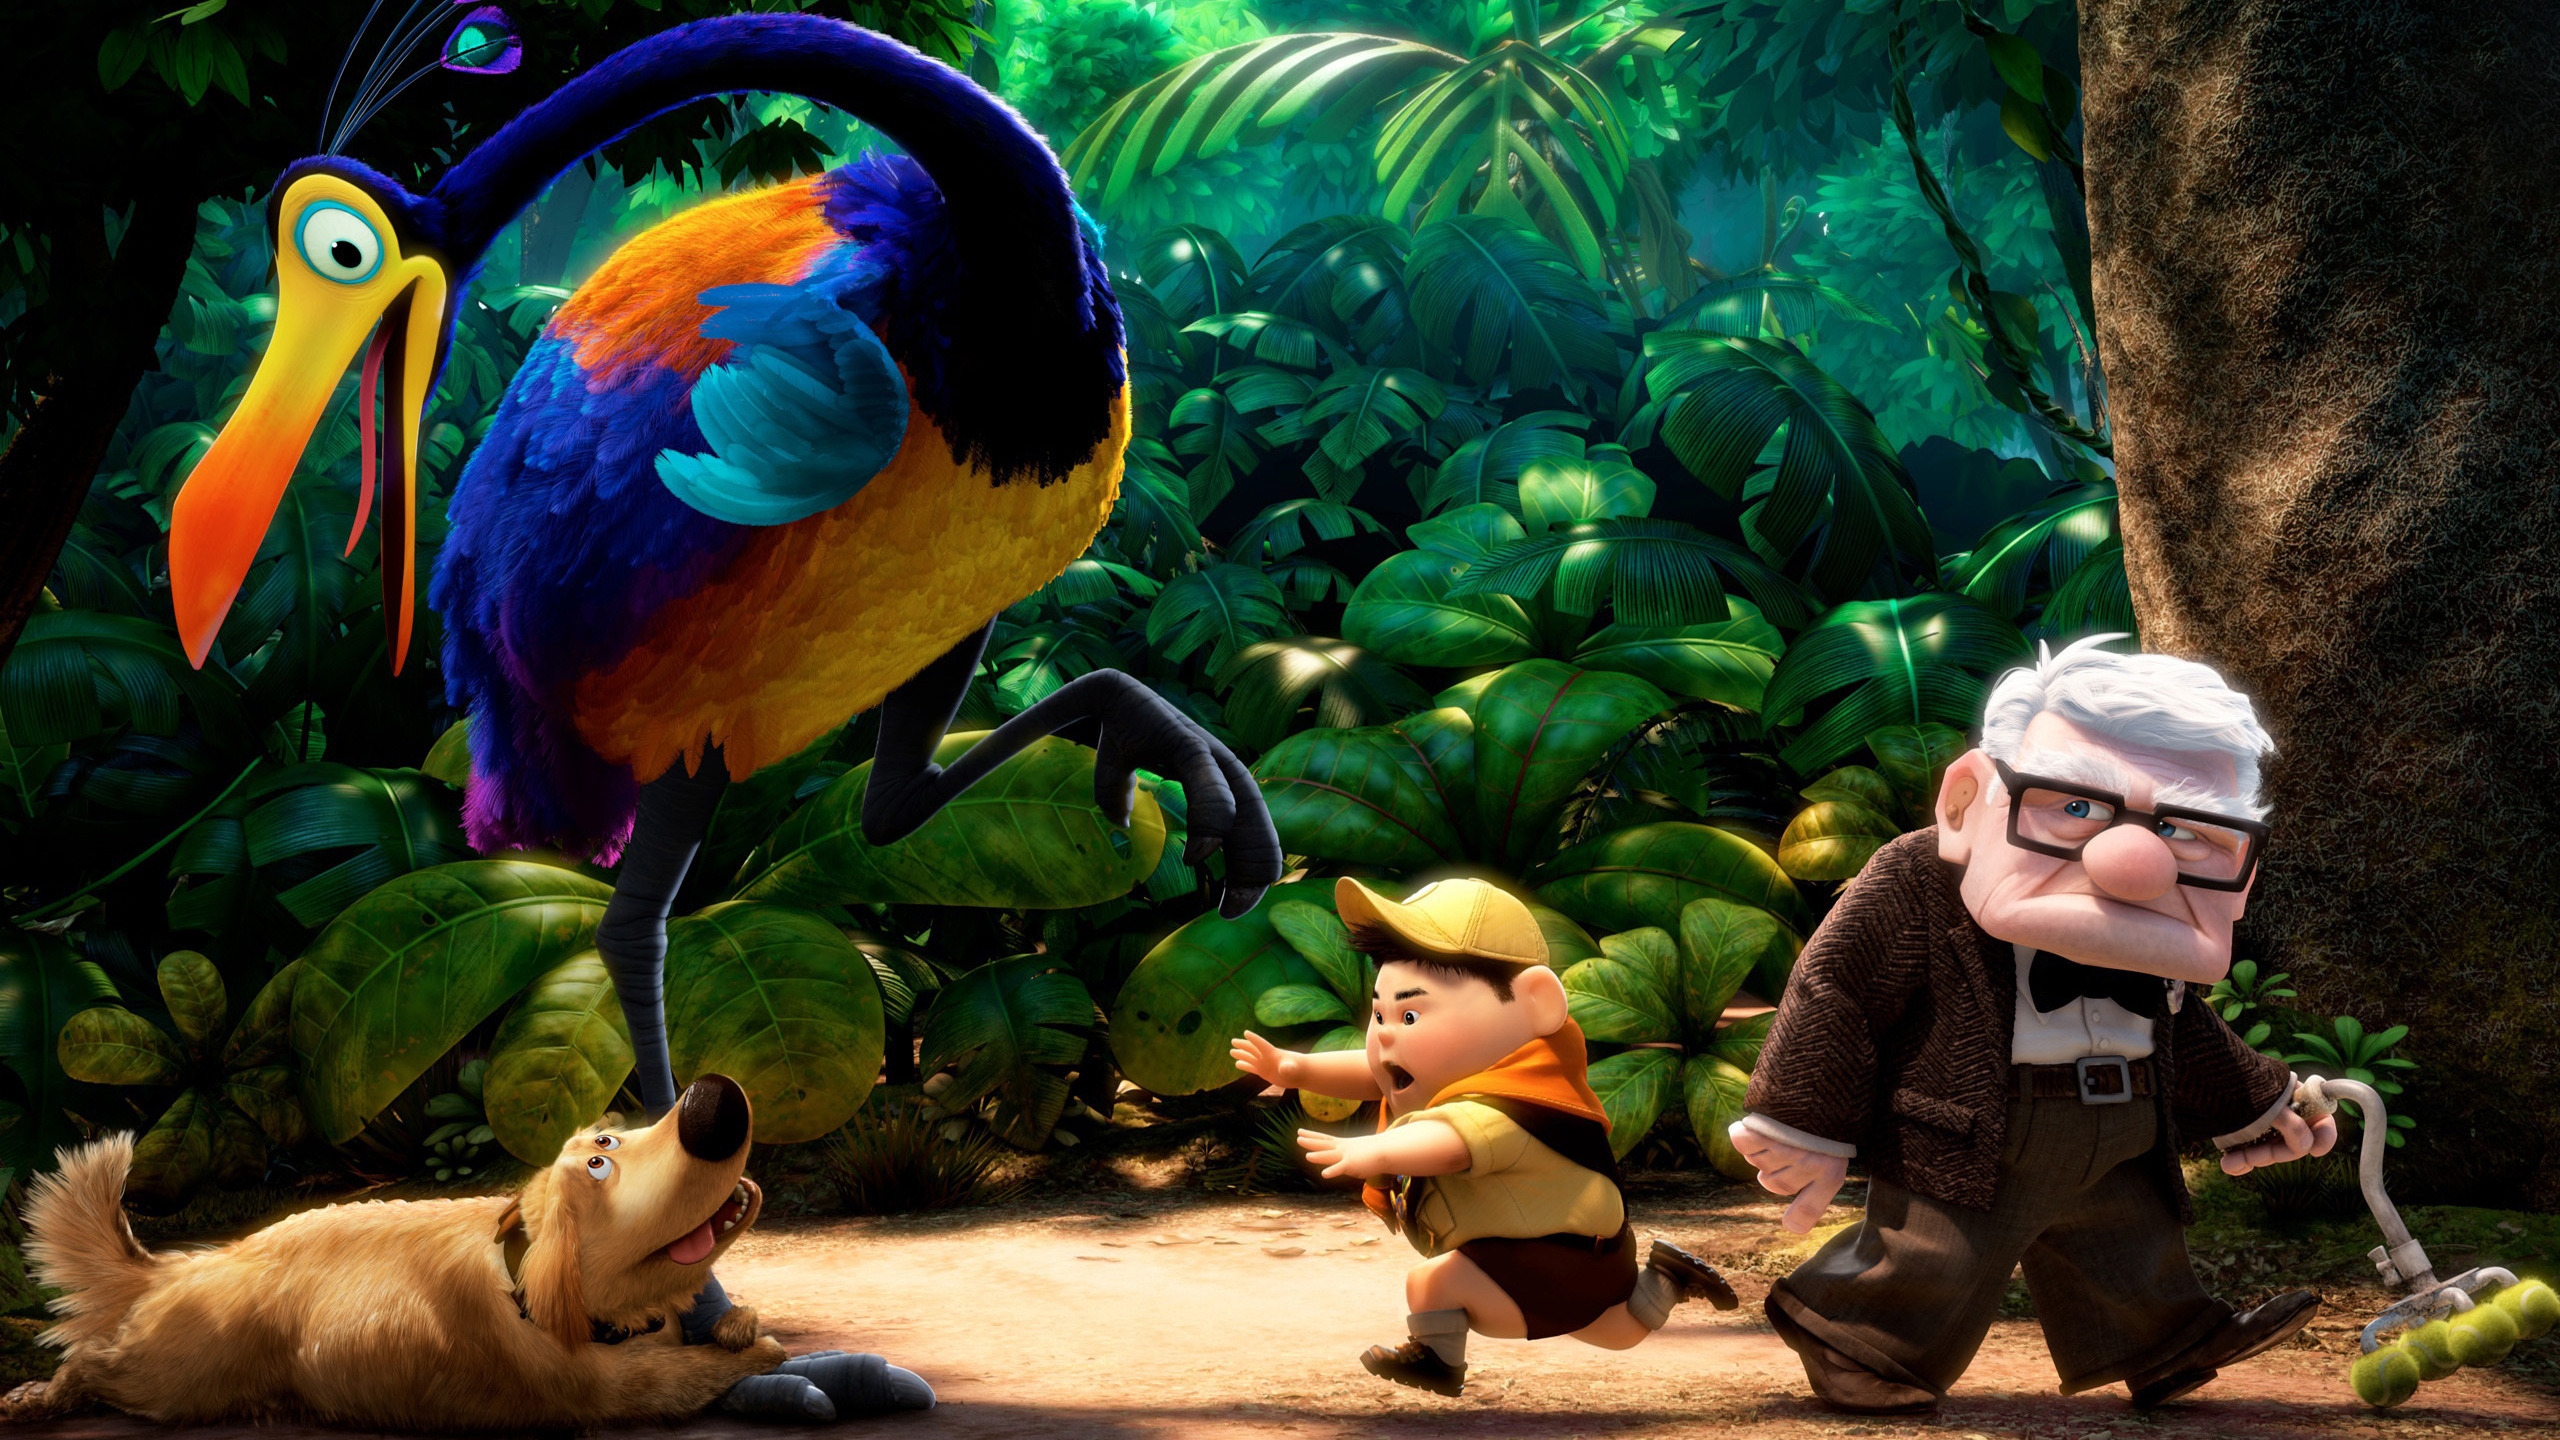 Up Pixar for 2560x1440 HDTV resolution